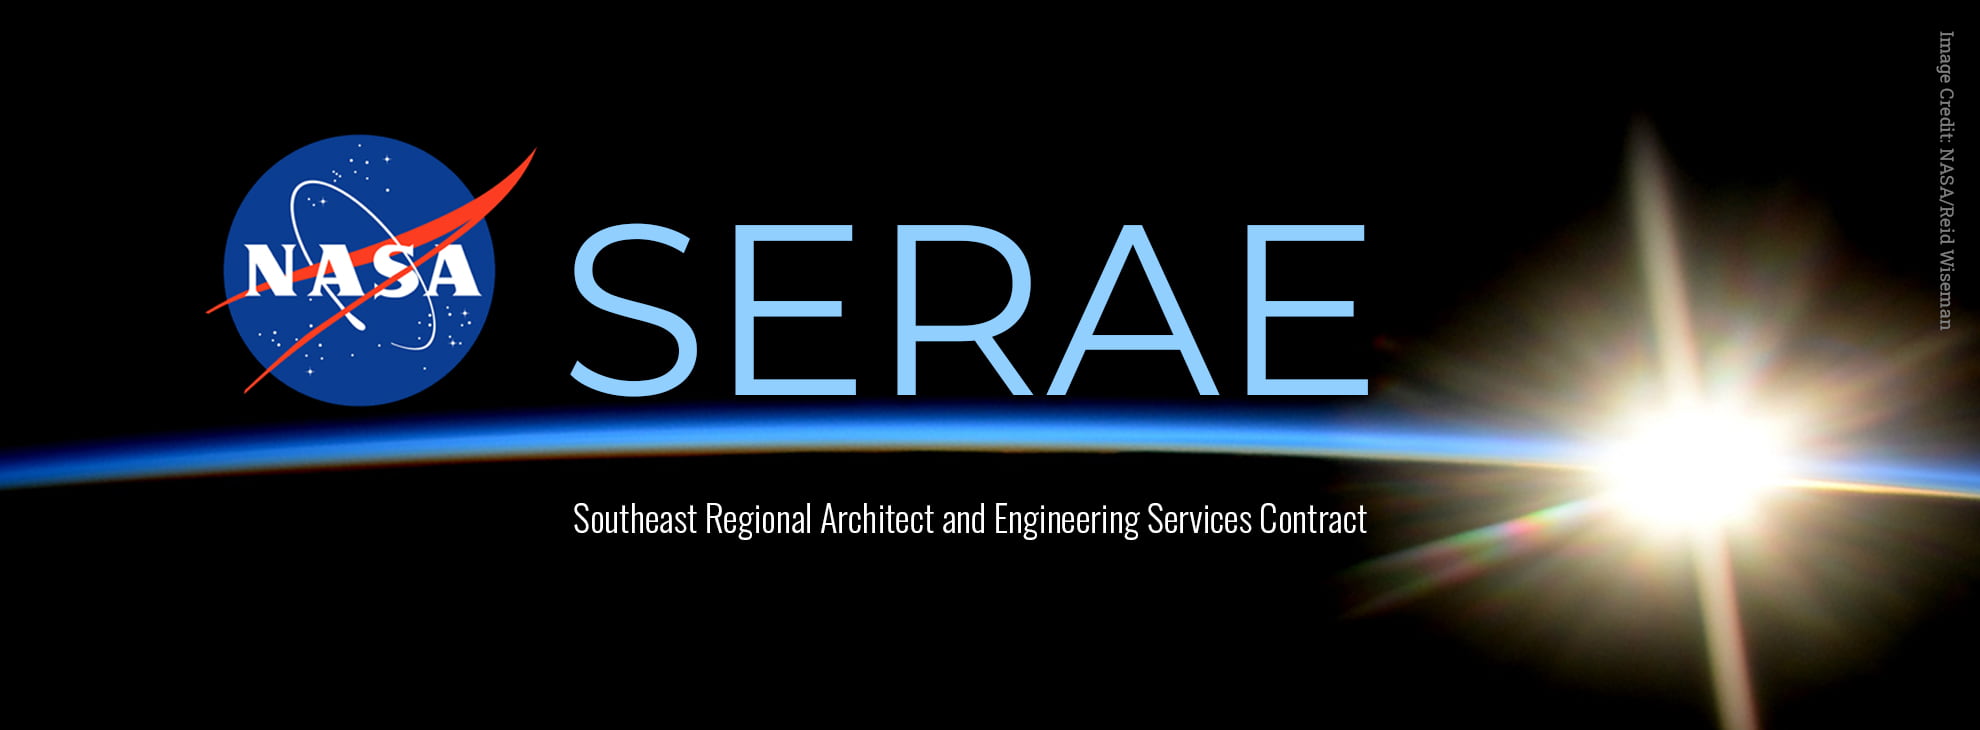 Nelson Engineering Awarded SERAE Contract by NASA v2